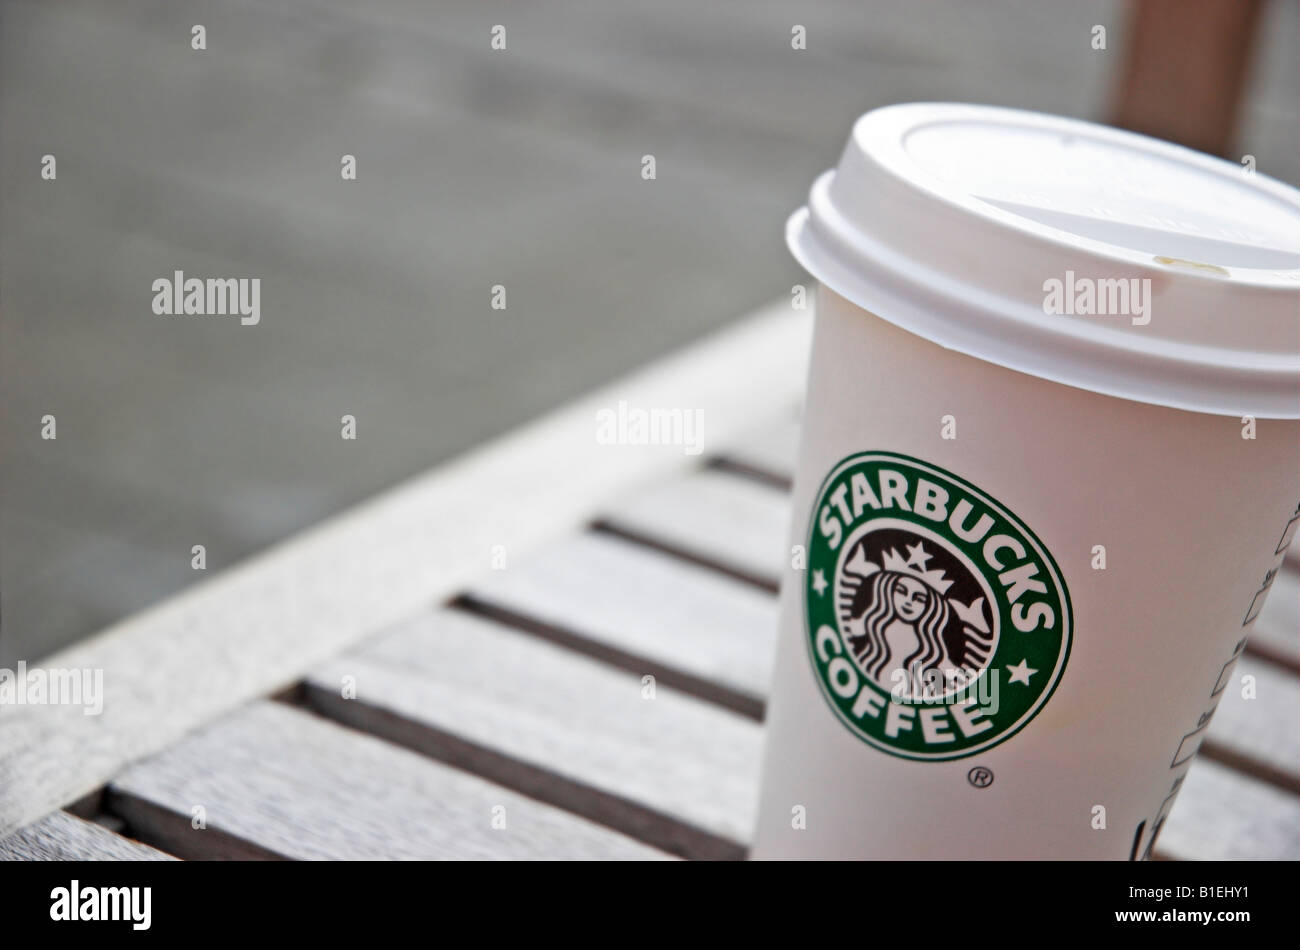 Starbucks take away coffee cup Stock Photo - Alamy